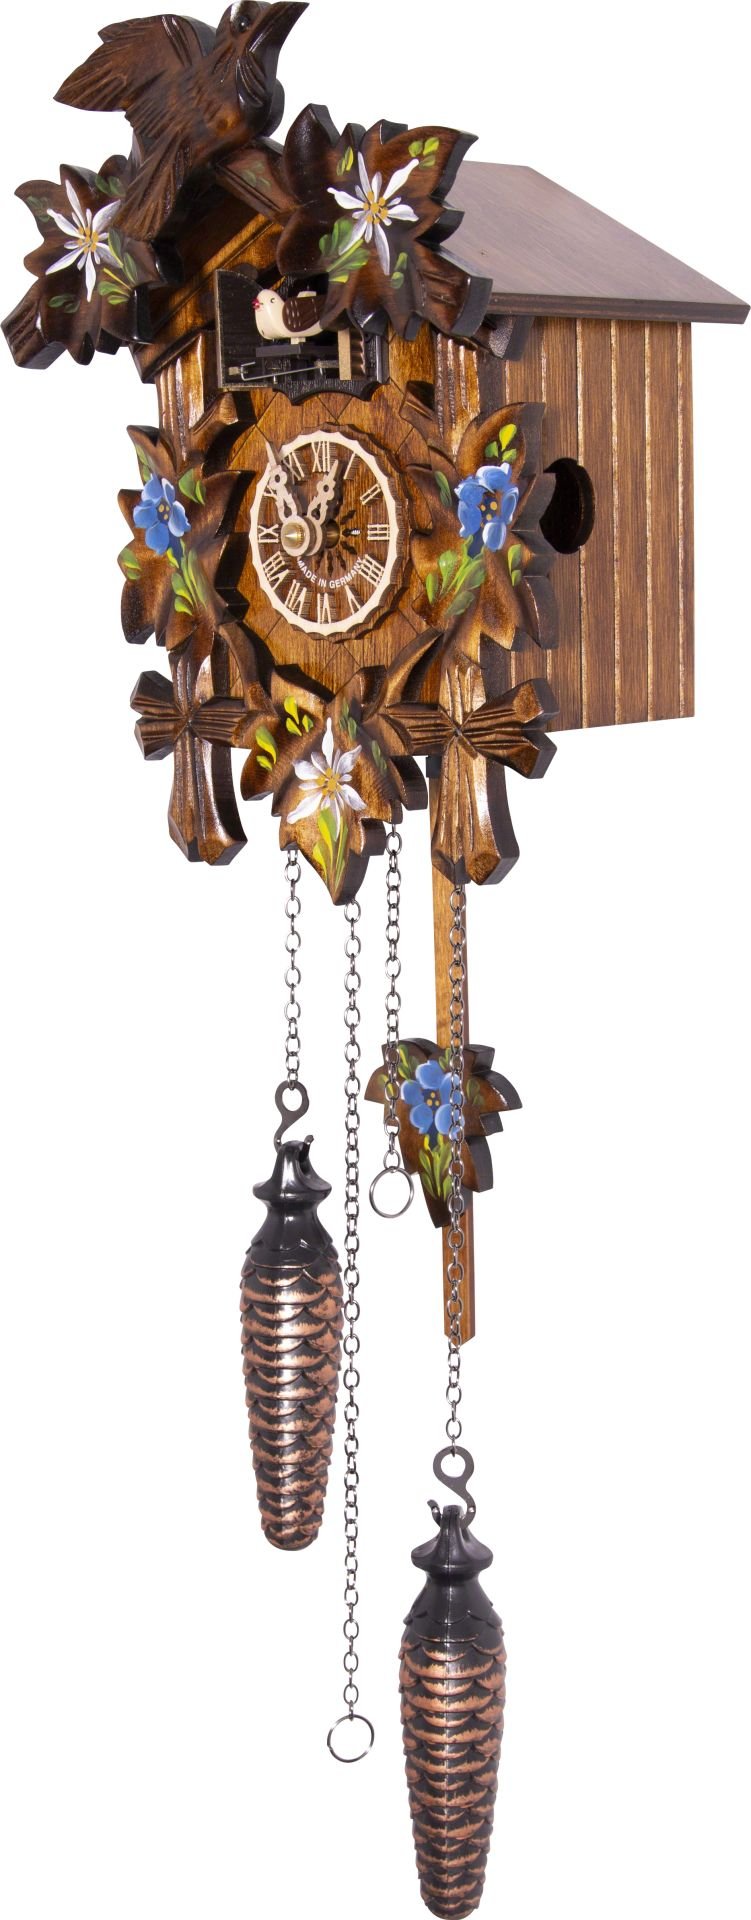 Reloj de cuco estilo “Madera tallada” de cuarzo 22cm de Engstler